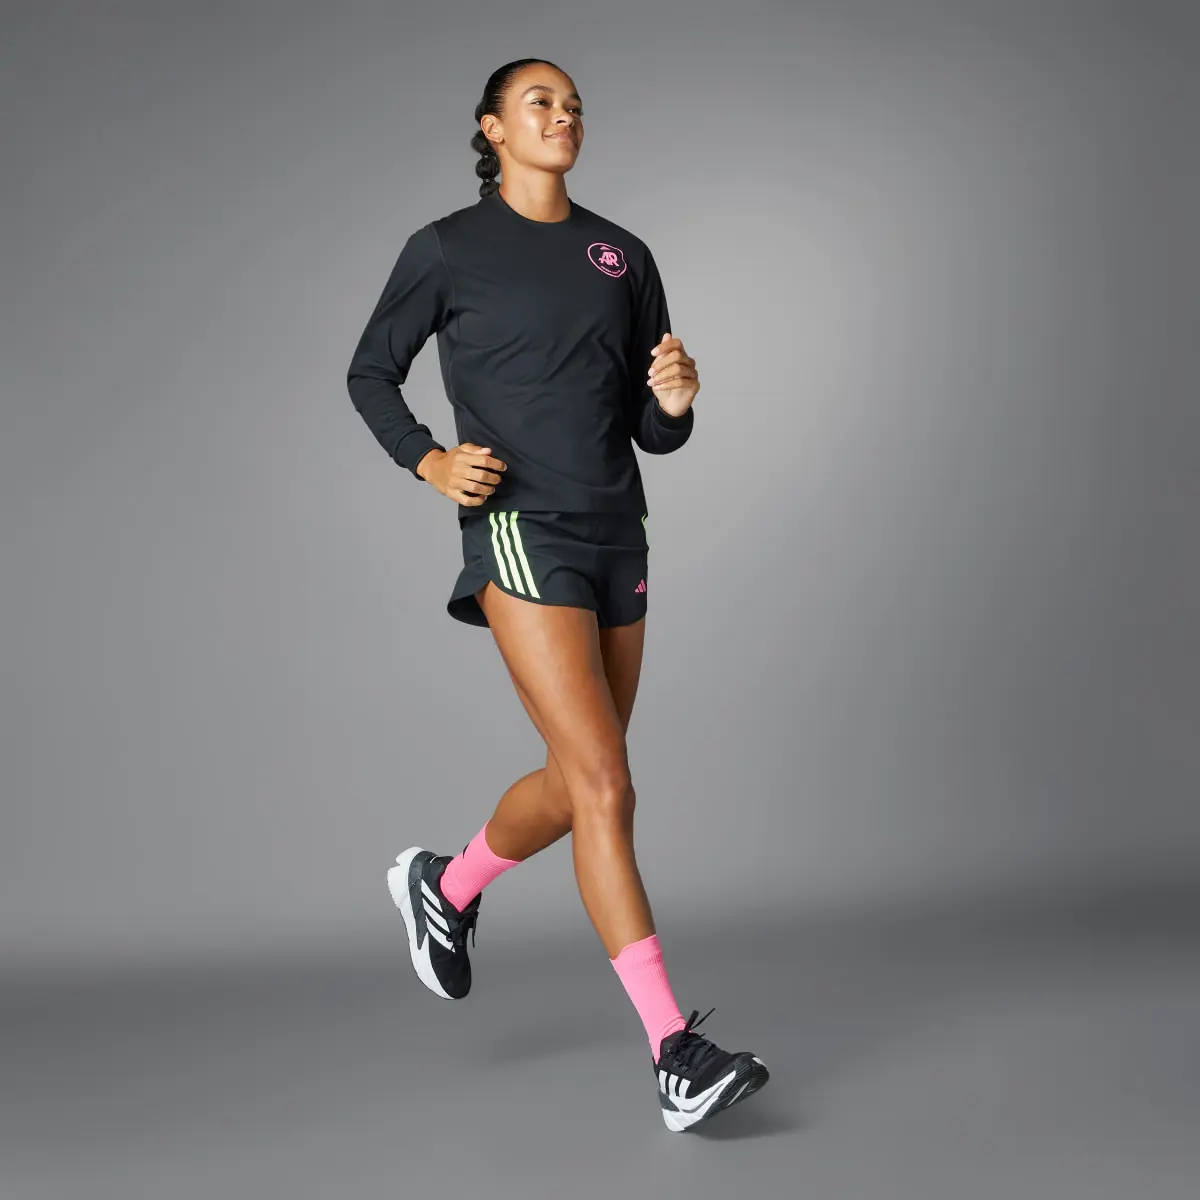 Adidas Own the Run adidas Runners Long Sleeve Long-Sleeve Top (Gender Neutral). 3